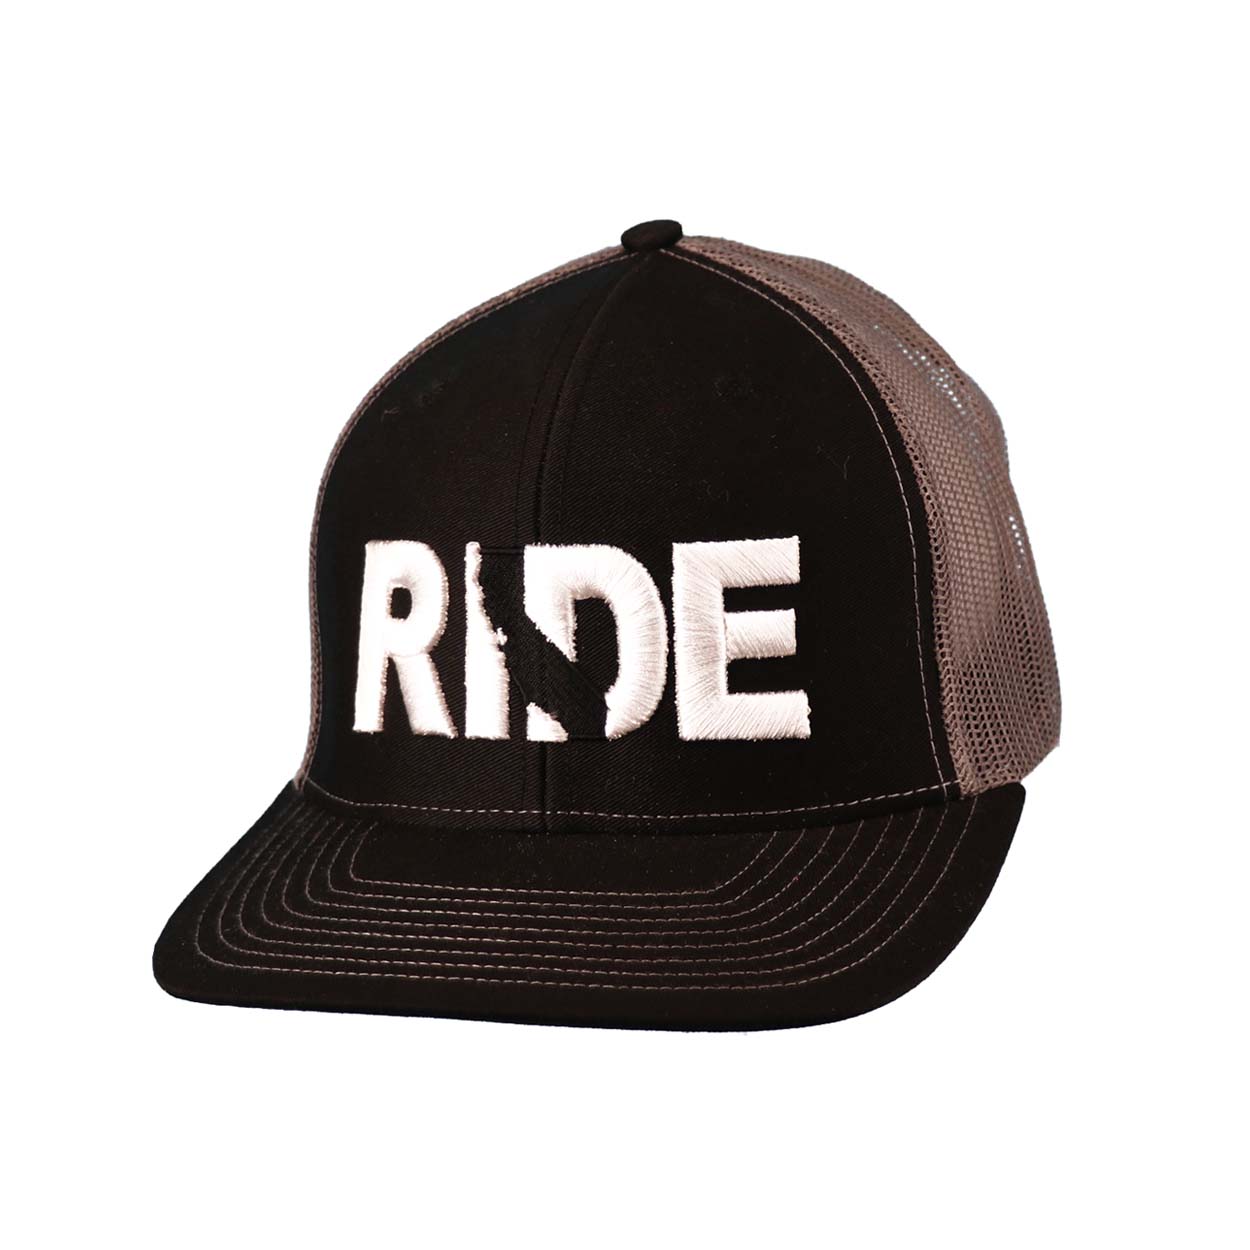 Ride California Classic Pro 3D Puff Embroidered Snapback Trucker Hat Black/Gray